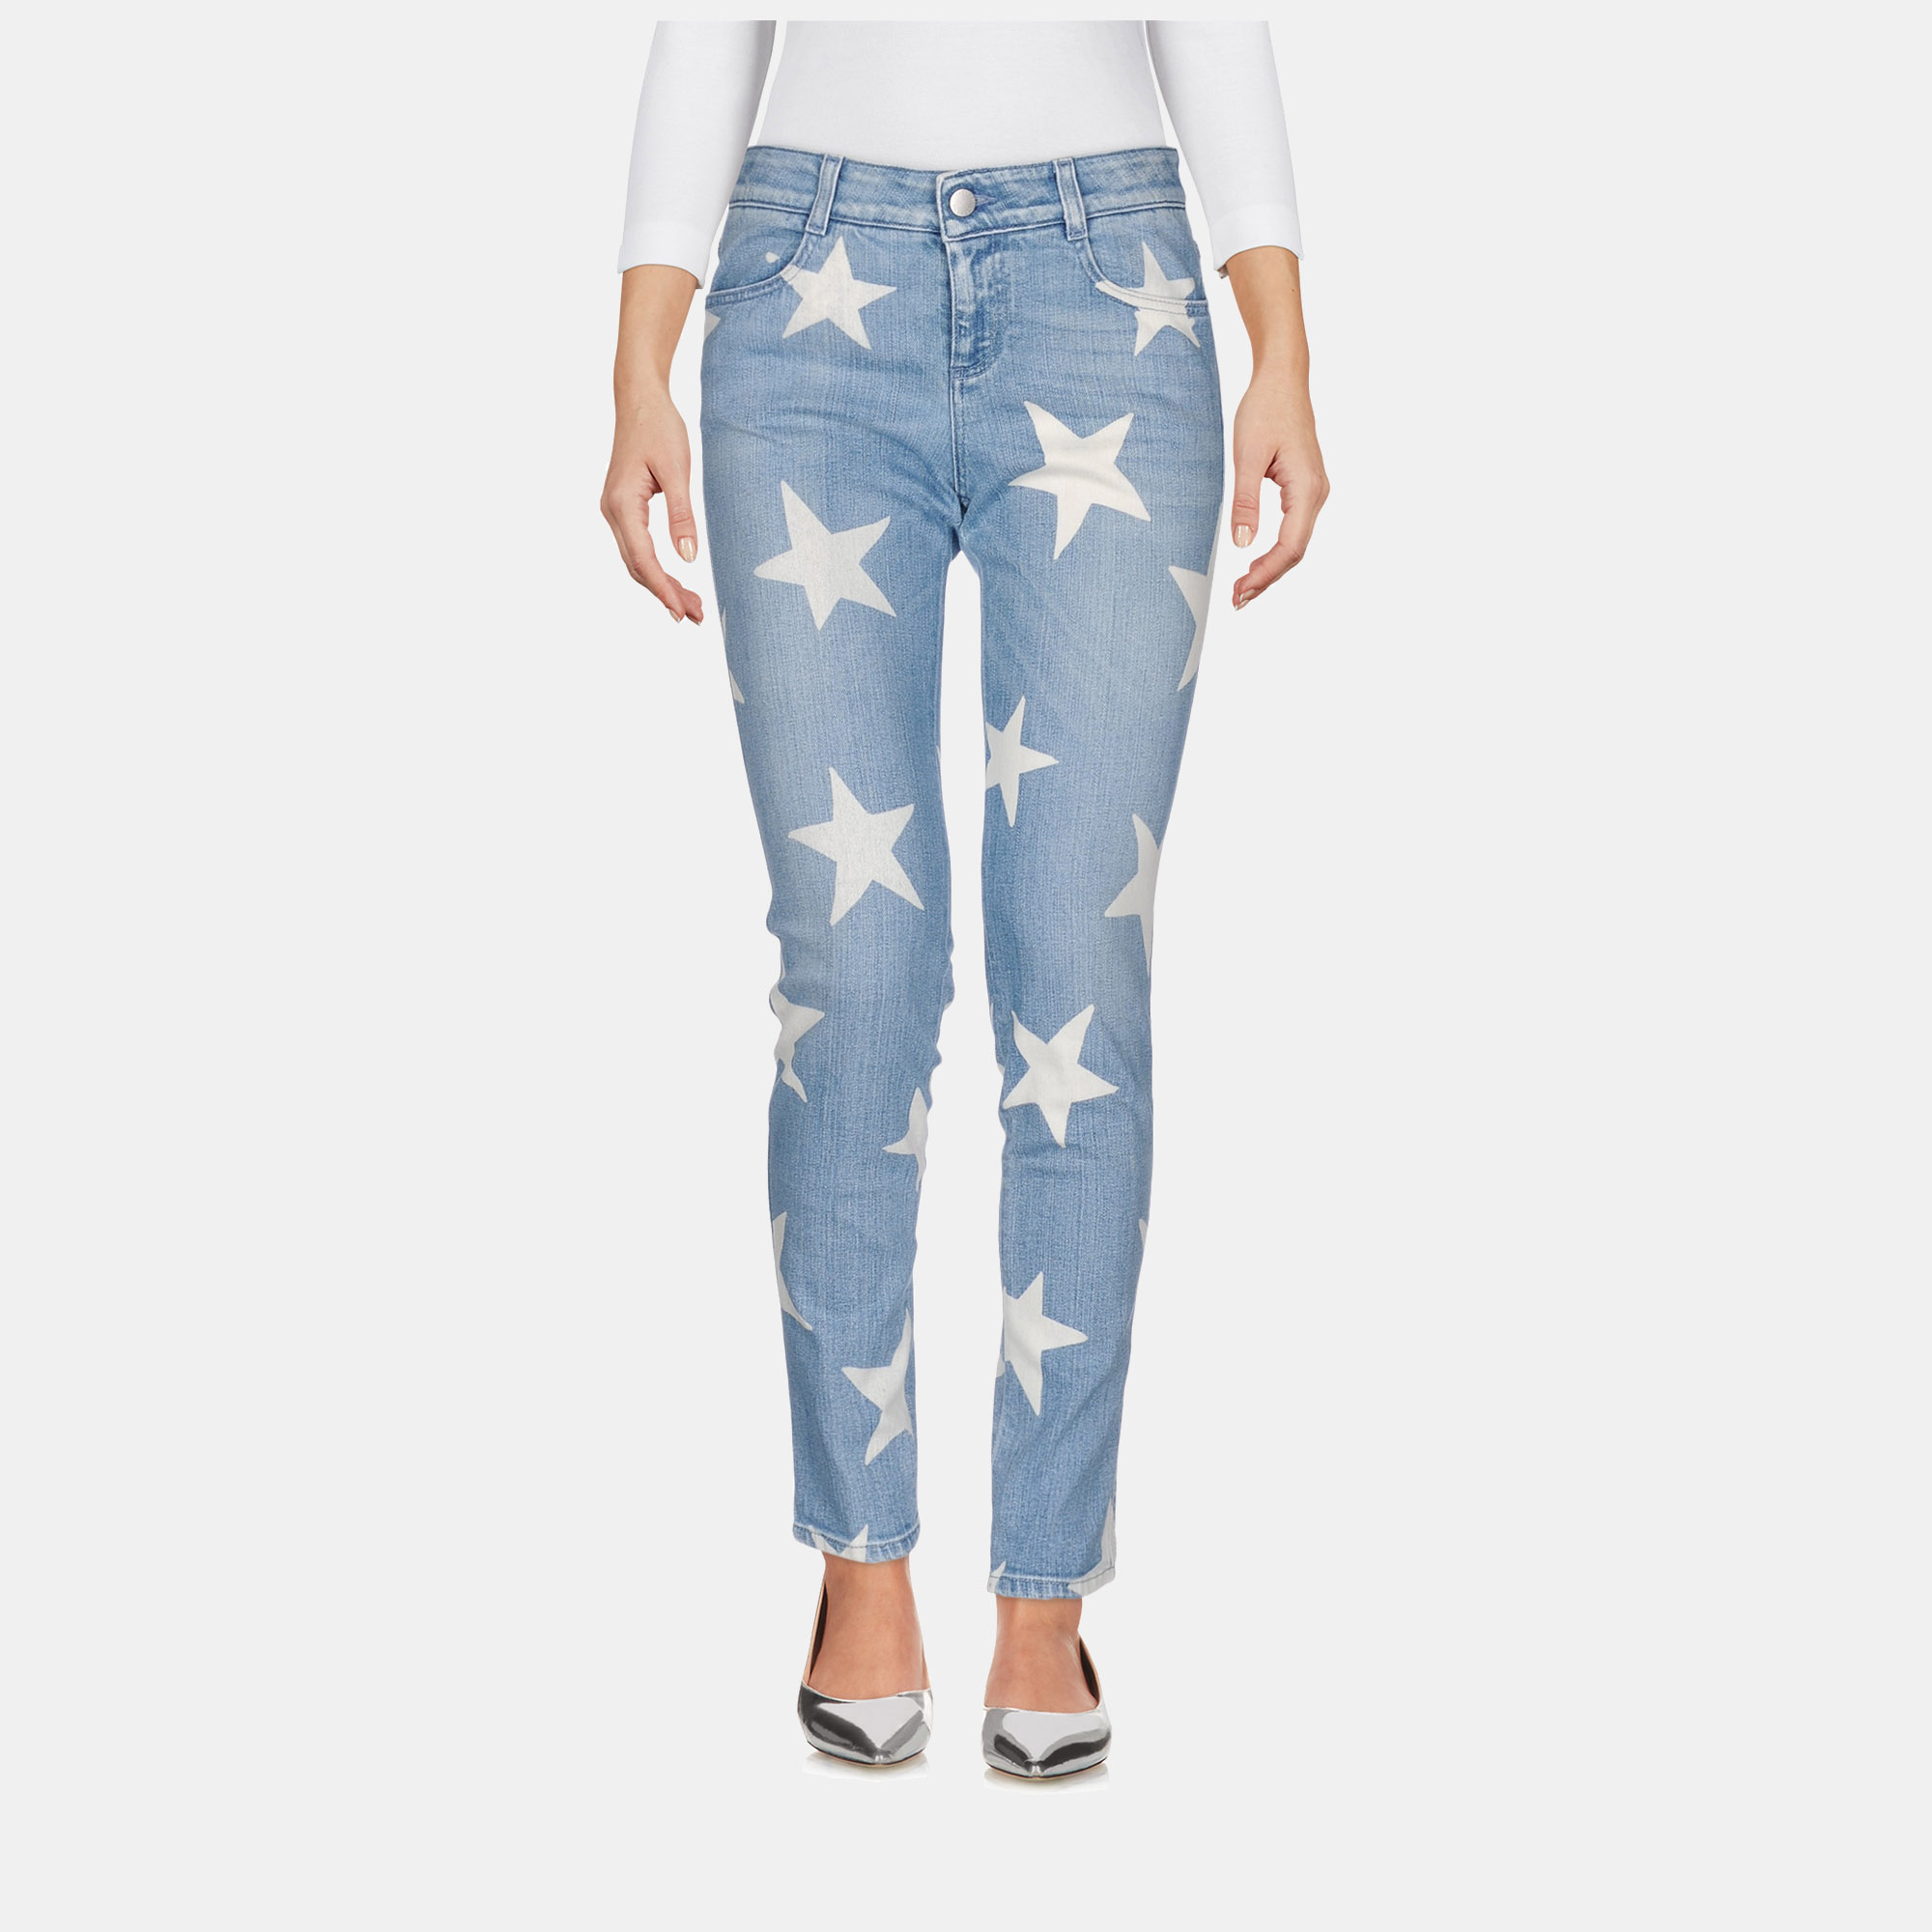 Stella mccartney blue star print cotton slim fit jeans xs (size 25)